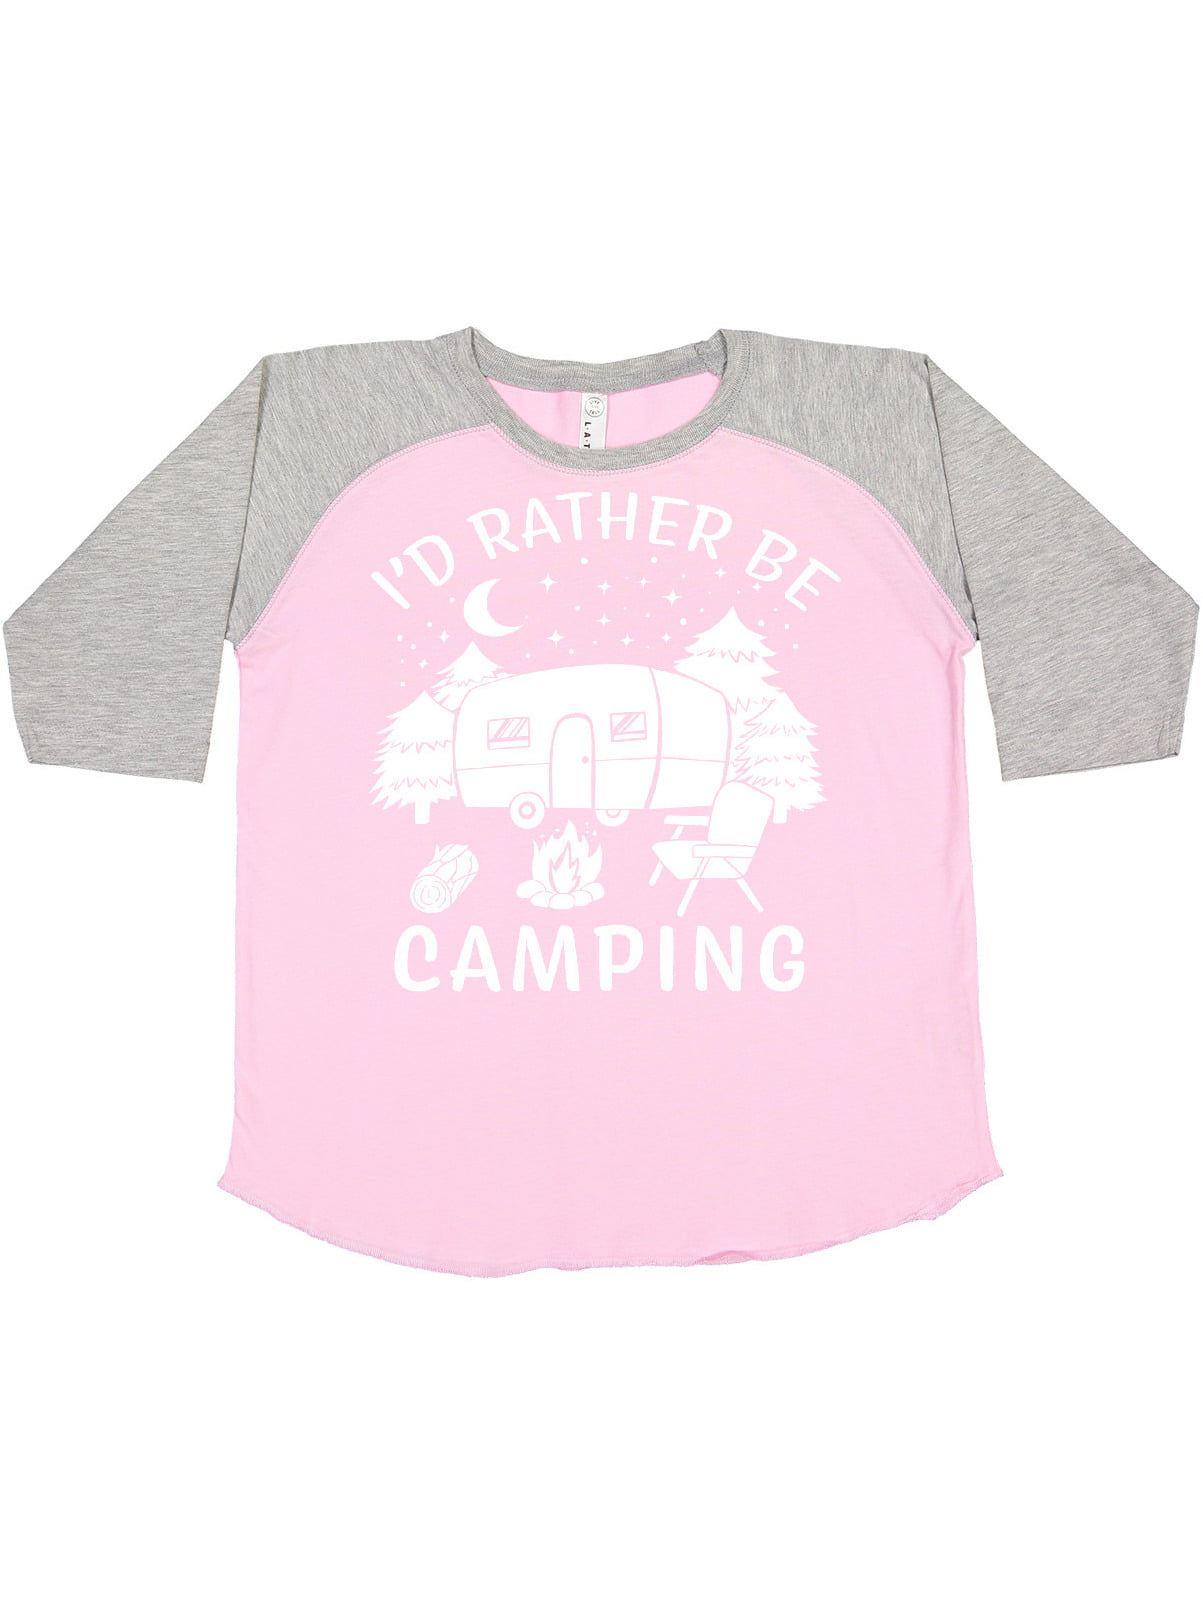 Camping T shirt I'd Rather Be Camping T shirt Children's T shirt 